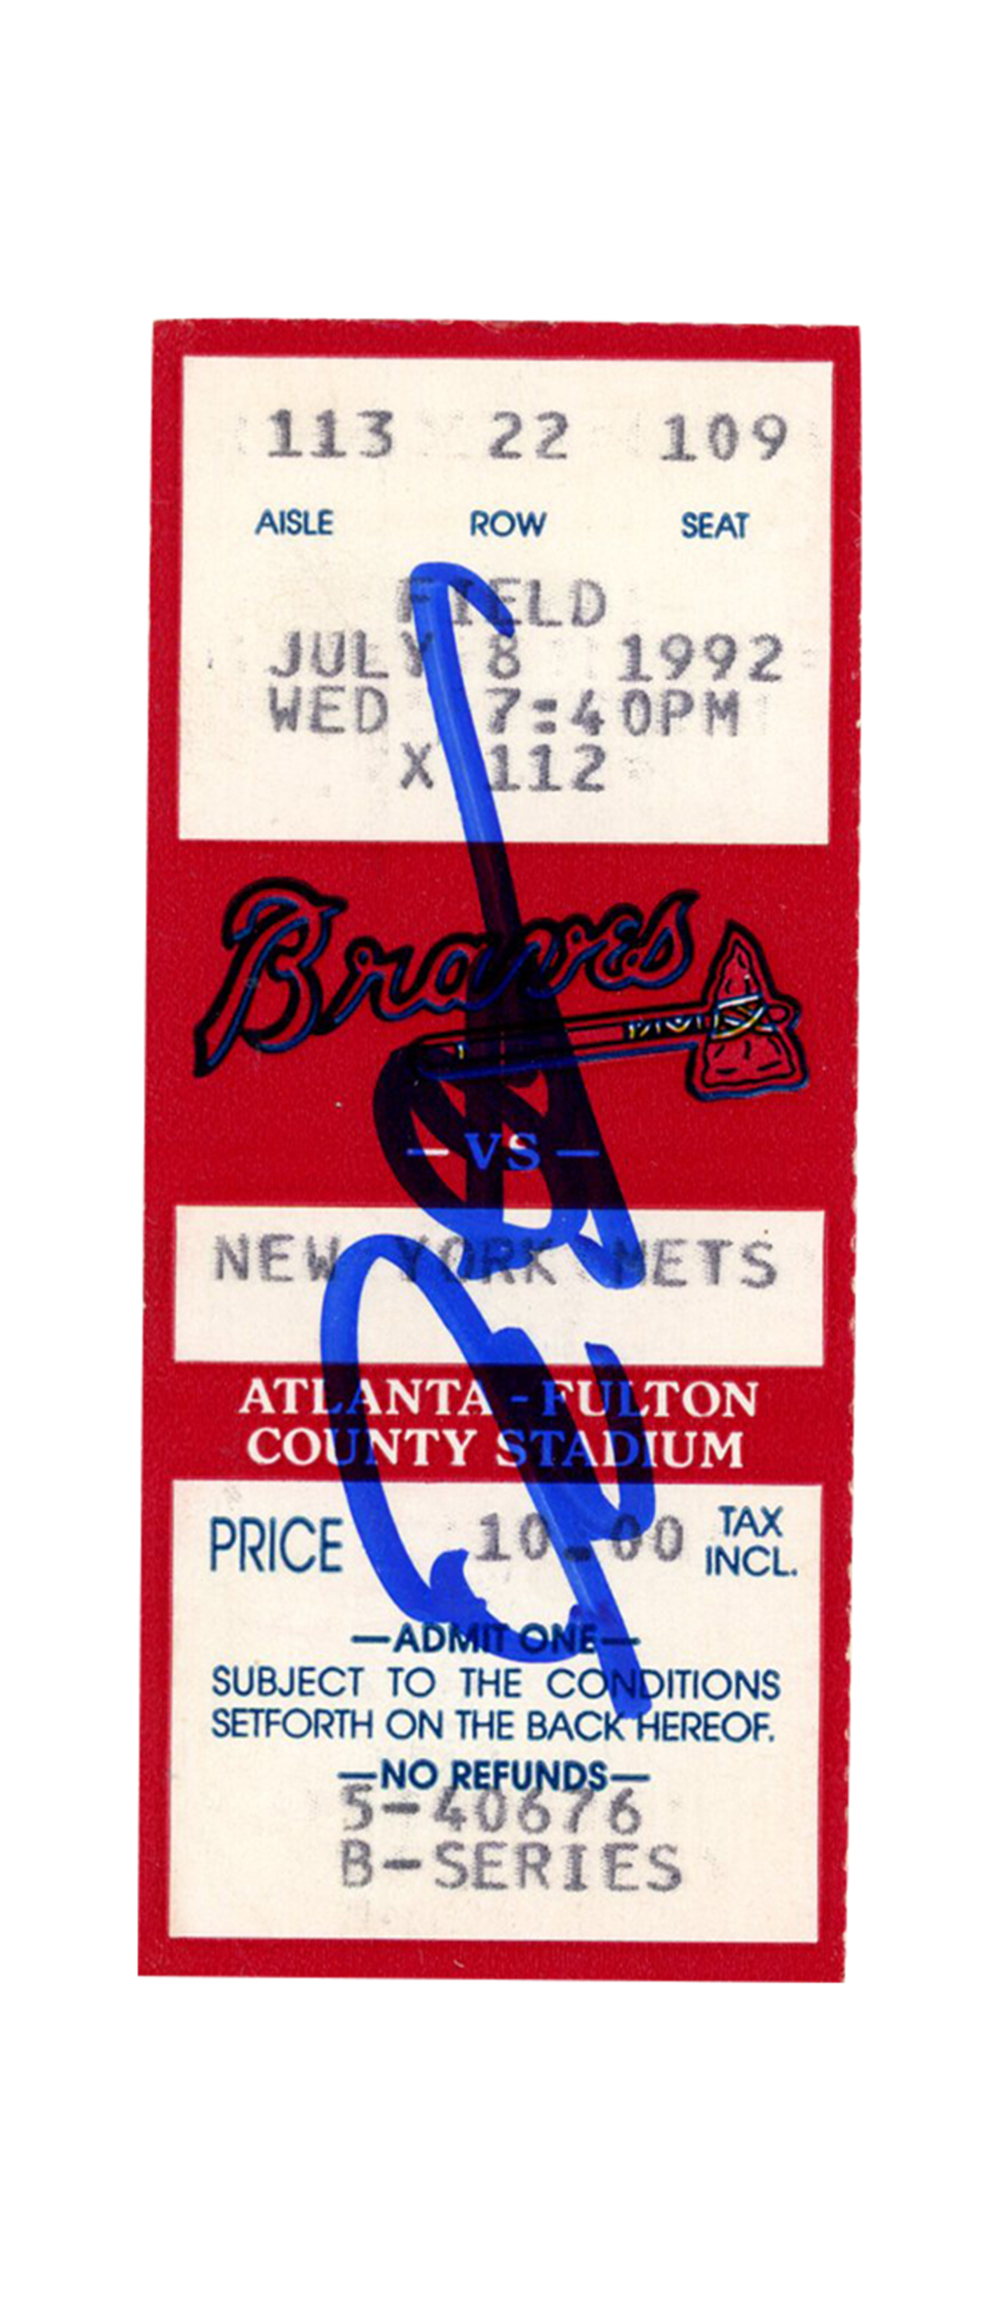 Deion Sanders Signed Atlanta Braves 7/8/1992 vs Mets Ticket BAS